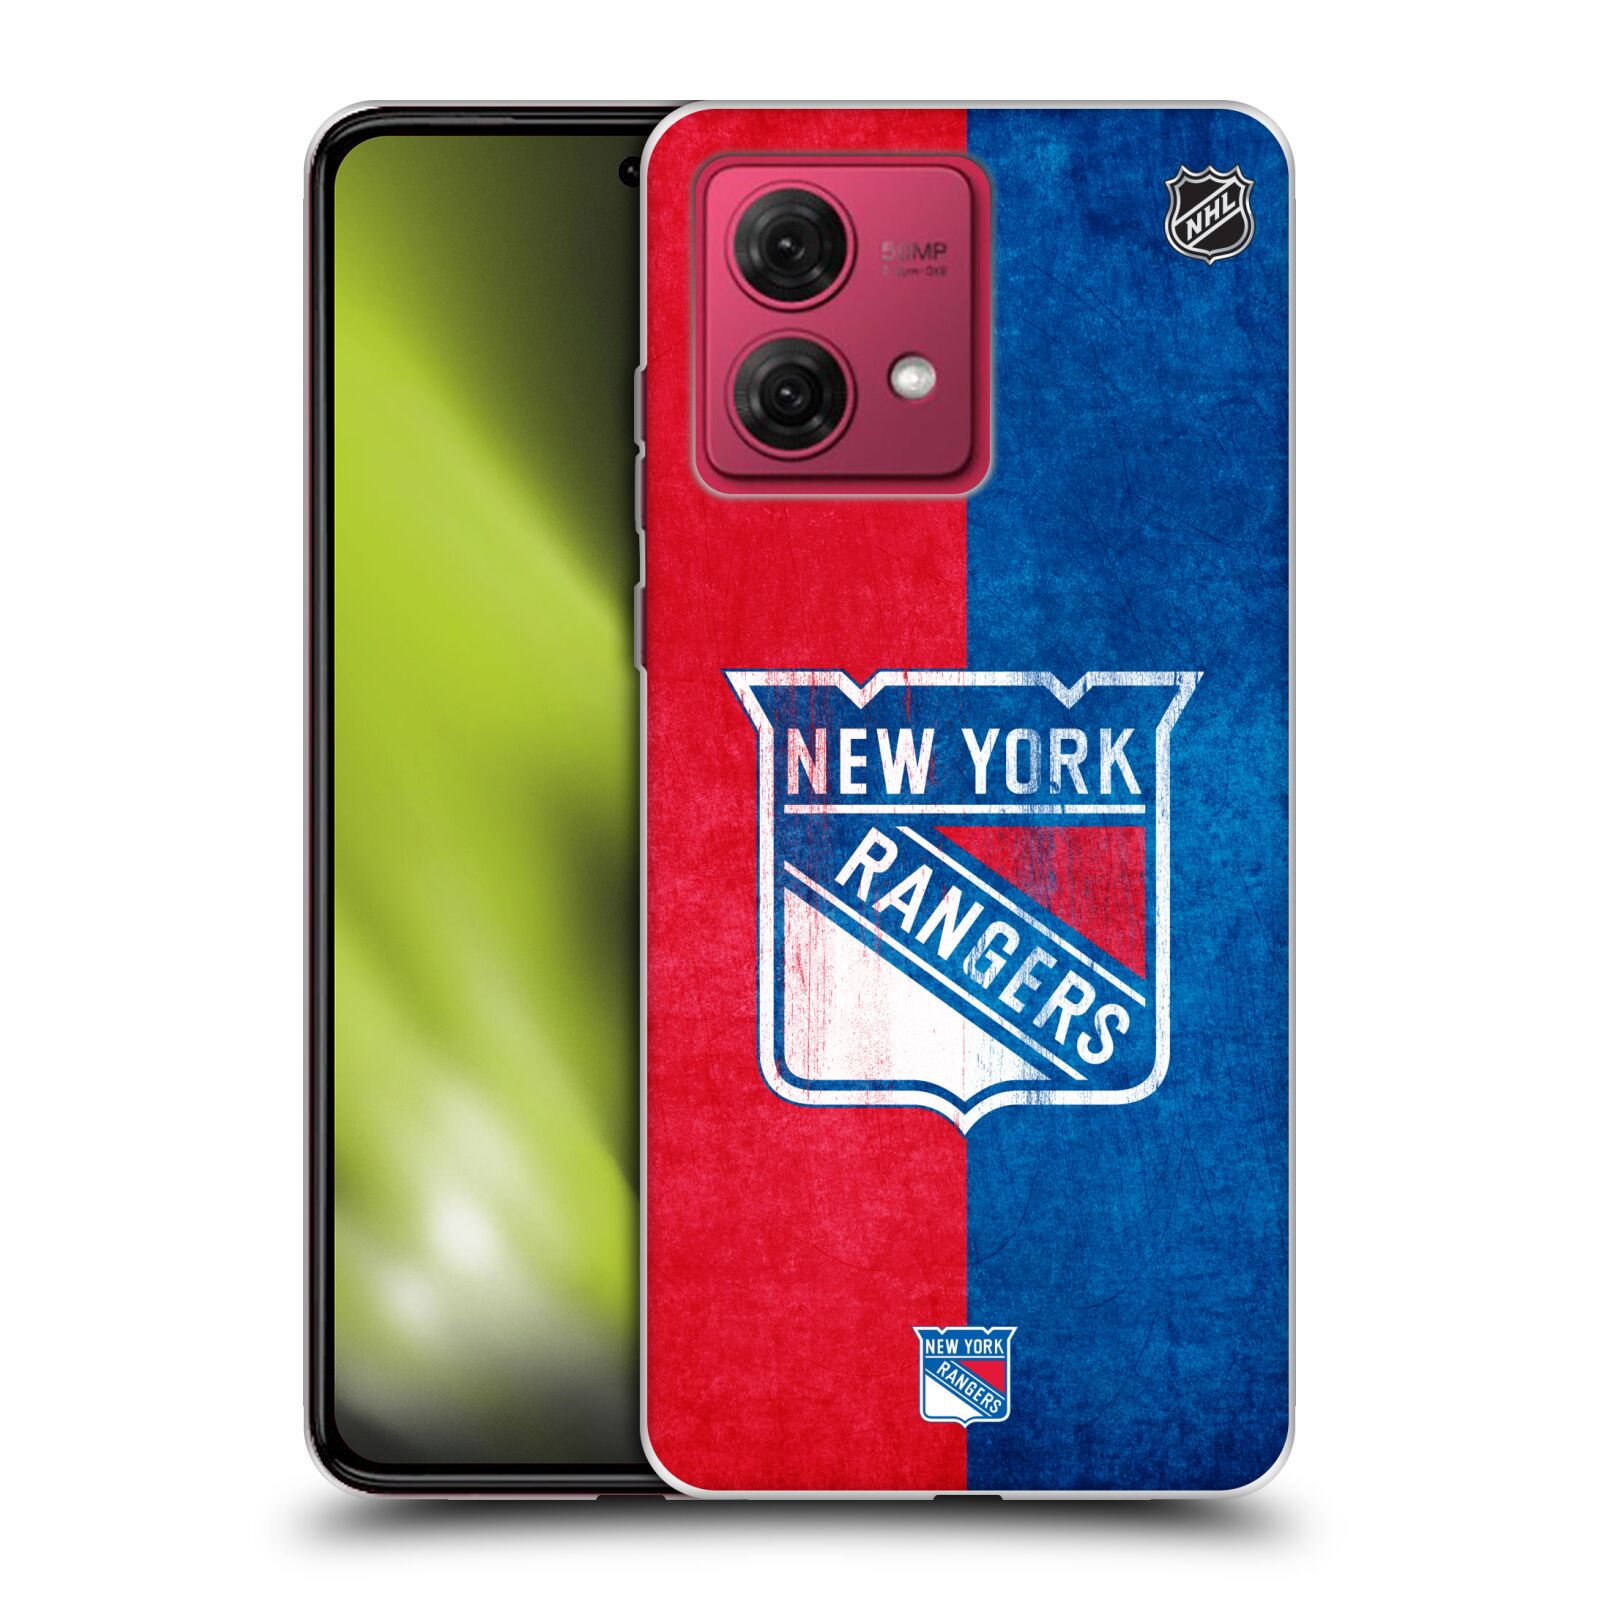 Silikonové pouzdro na mobil Motorola Moto G84 5G - NHL - Půlené logo New York Rangers (Silikonový kryt, obal, pouzdro na mobilní telefon Motorola Moto G84 5G s licencovaným motivem NHL - Půlené logo New York Rangers)